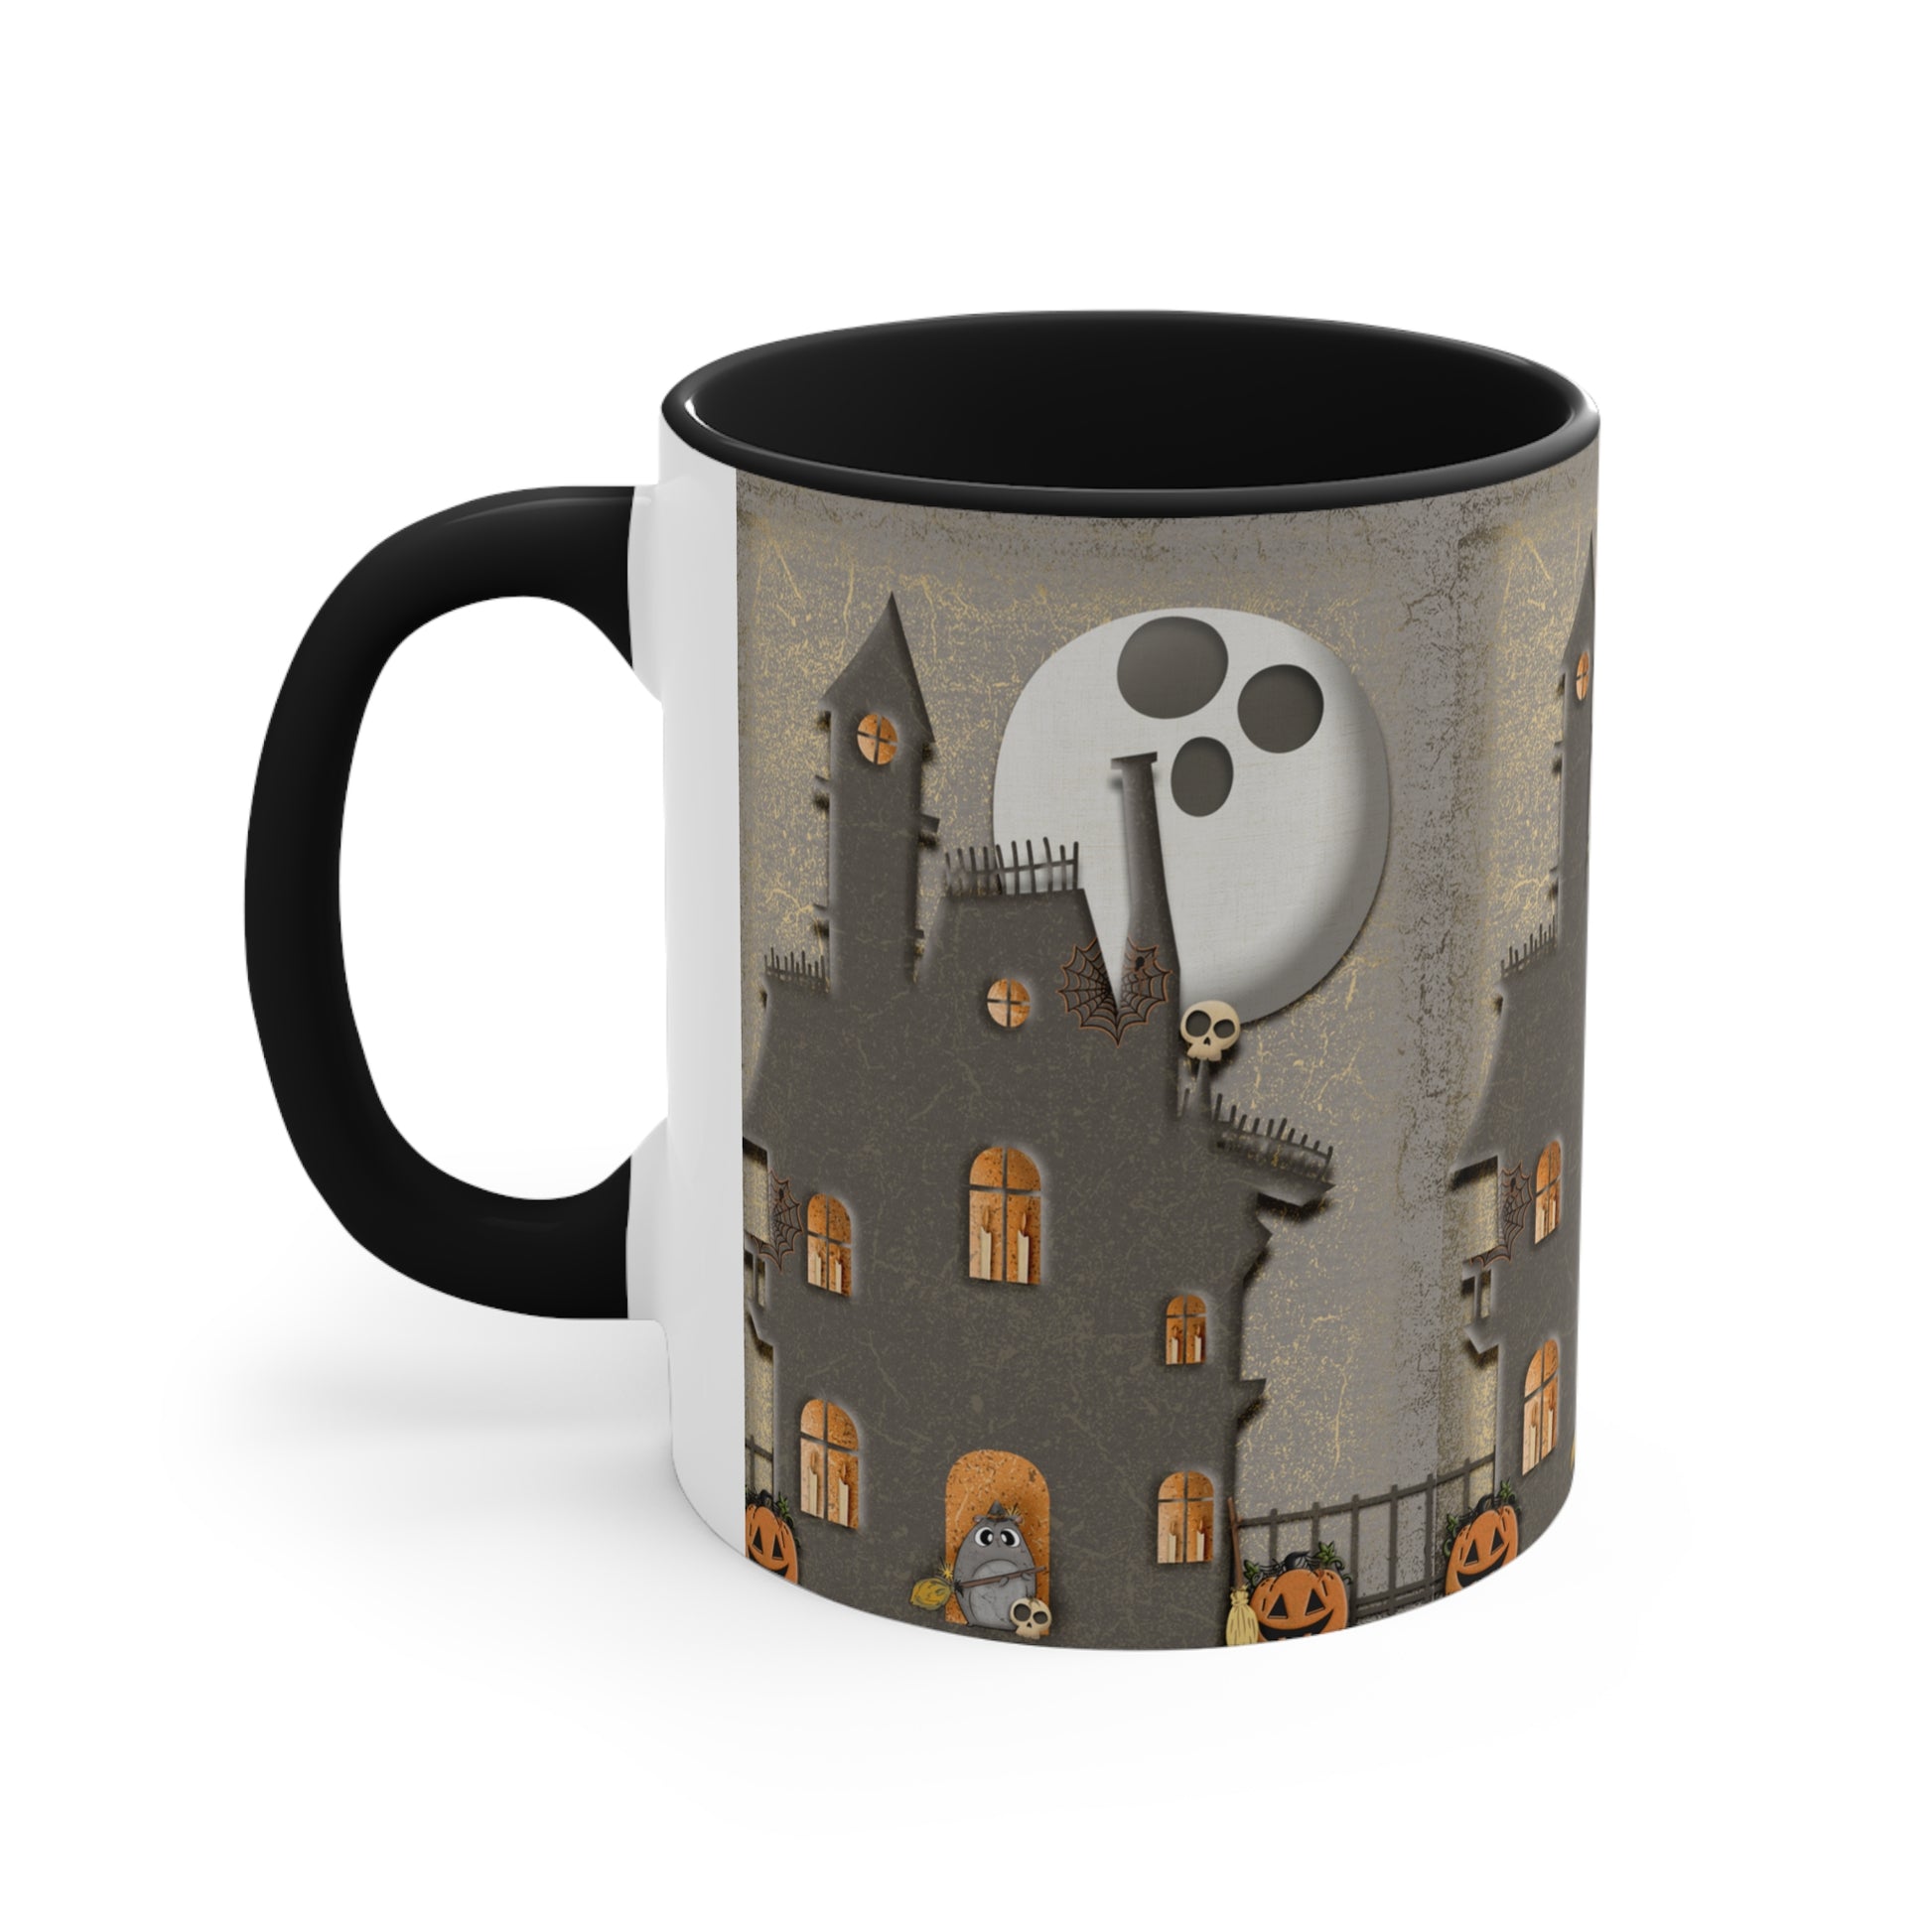 Two Tone Accent Coffee Mug, 11oz - Haunted House black handle